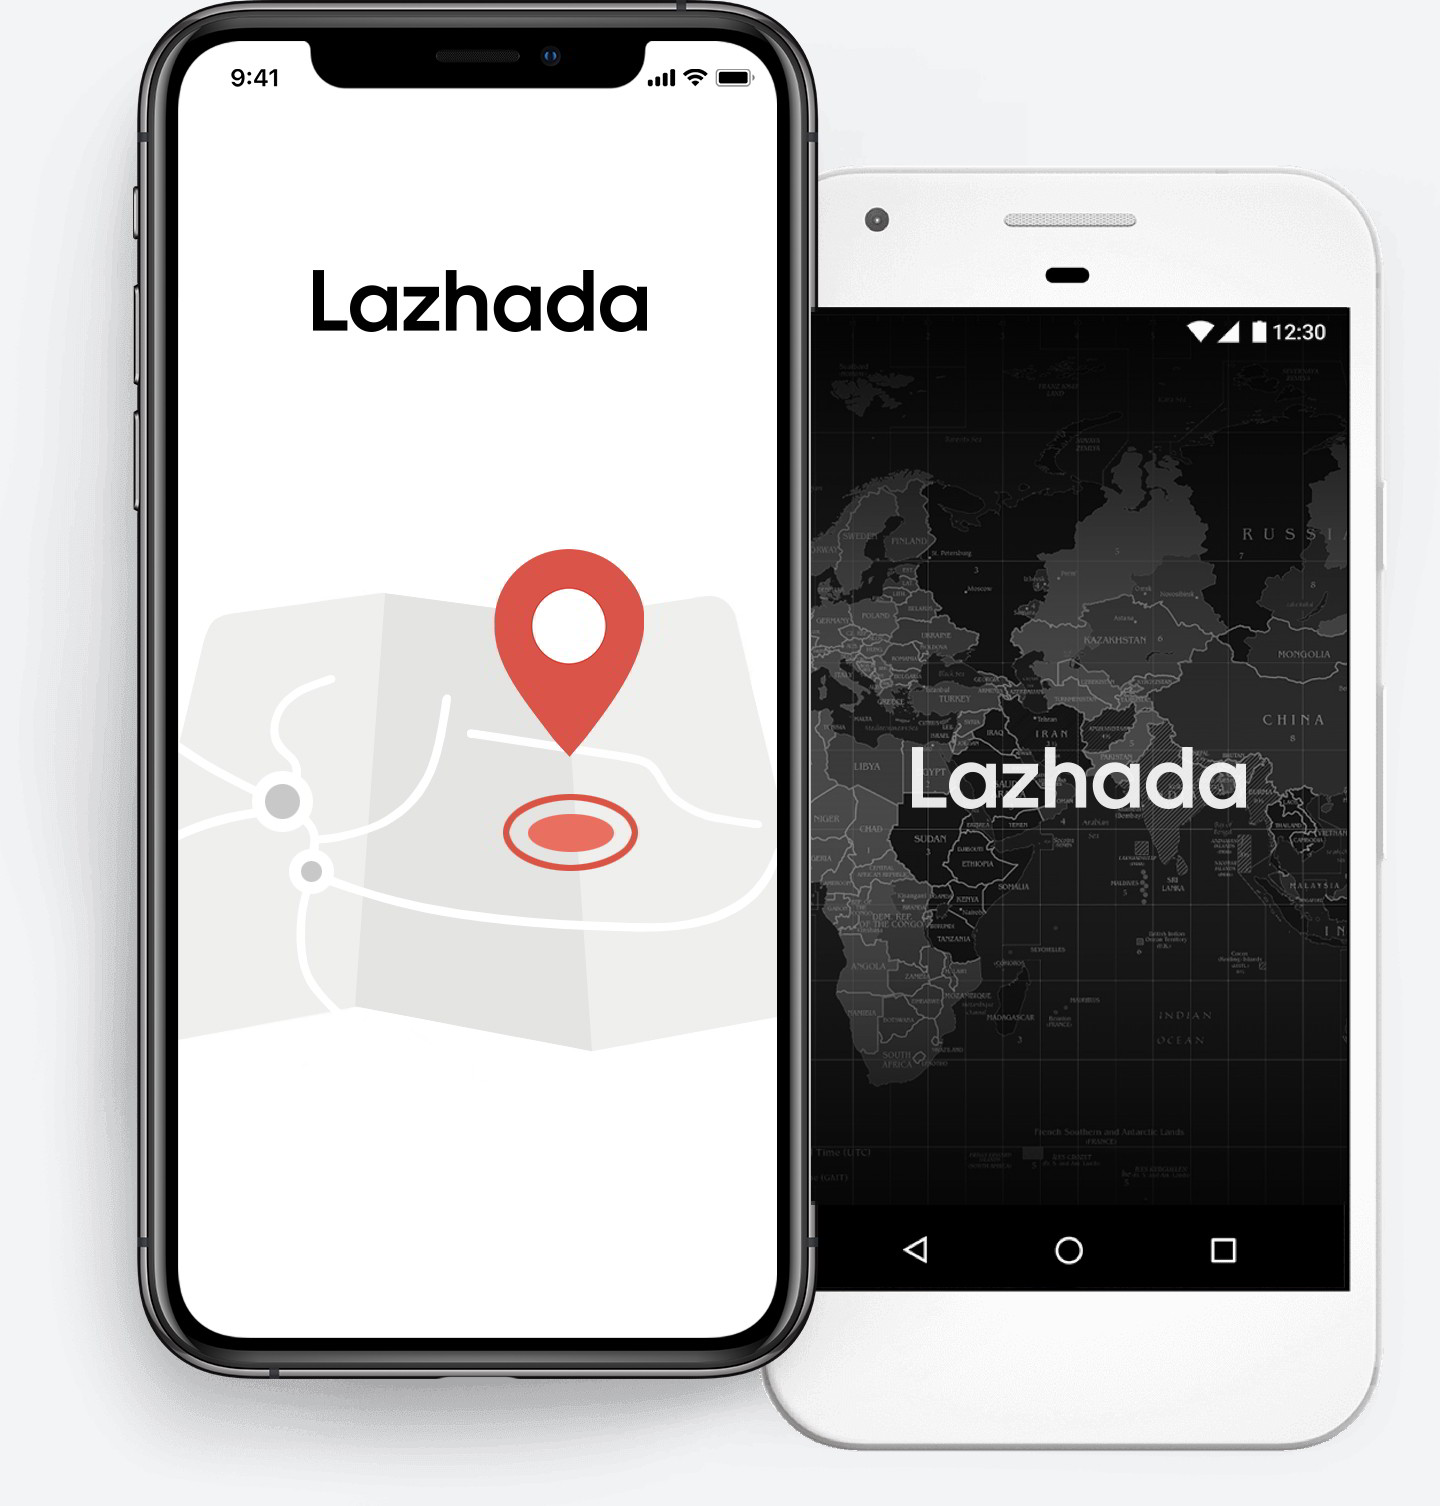 Lazhada app